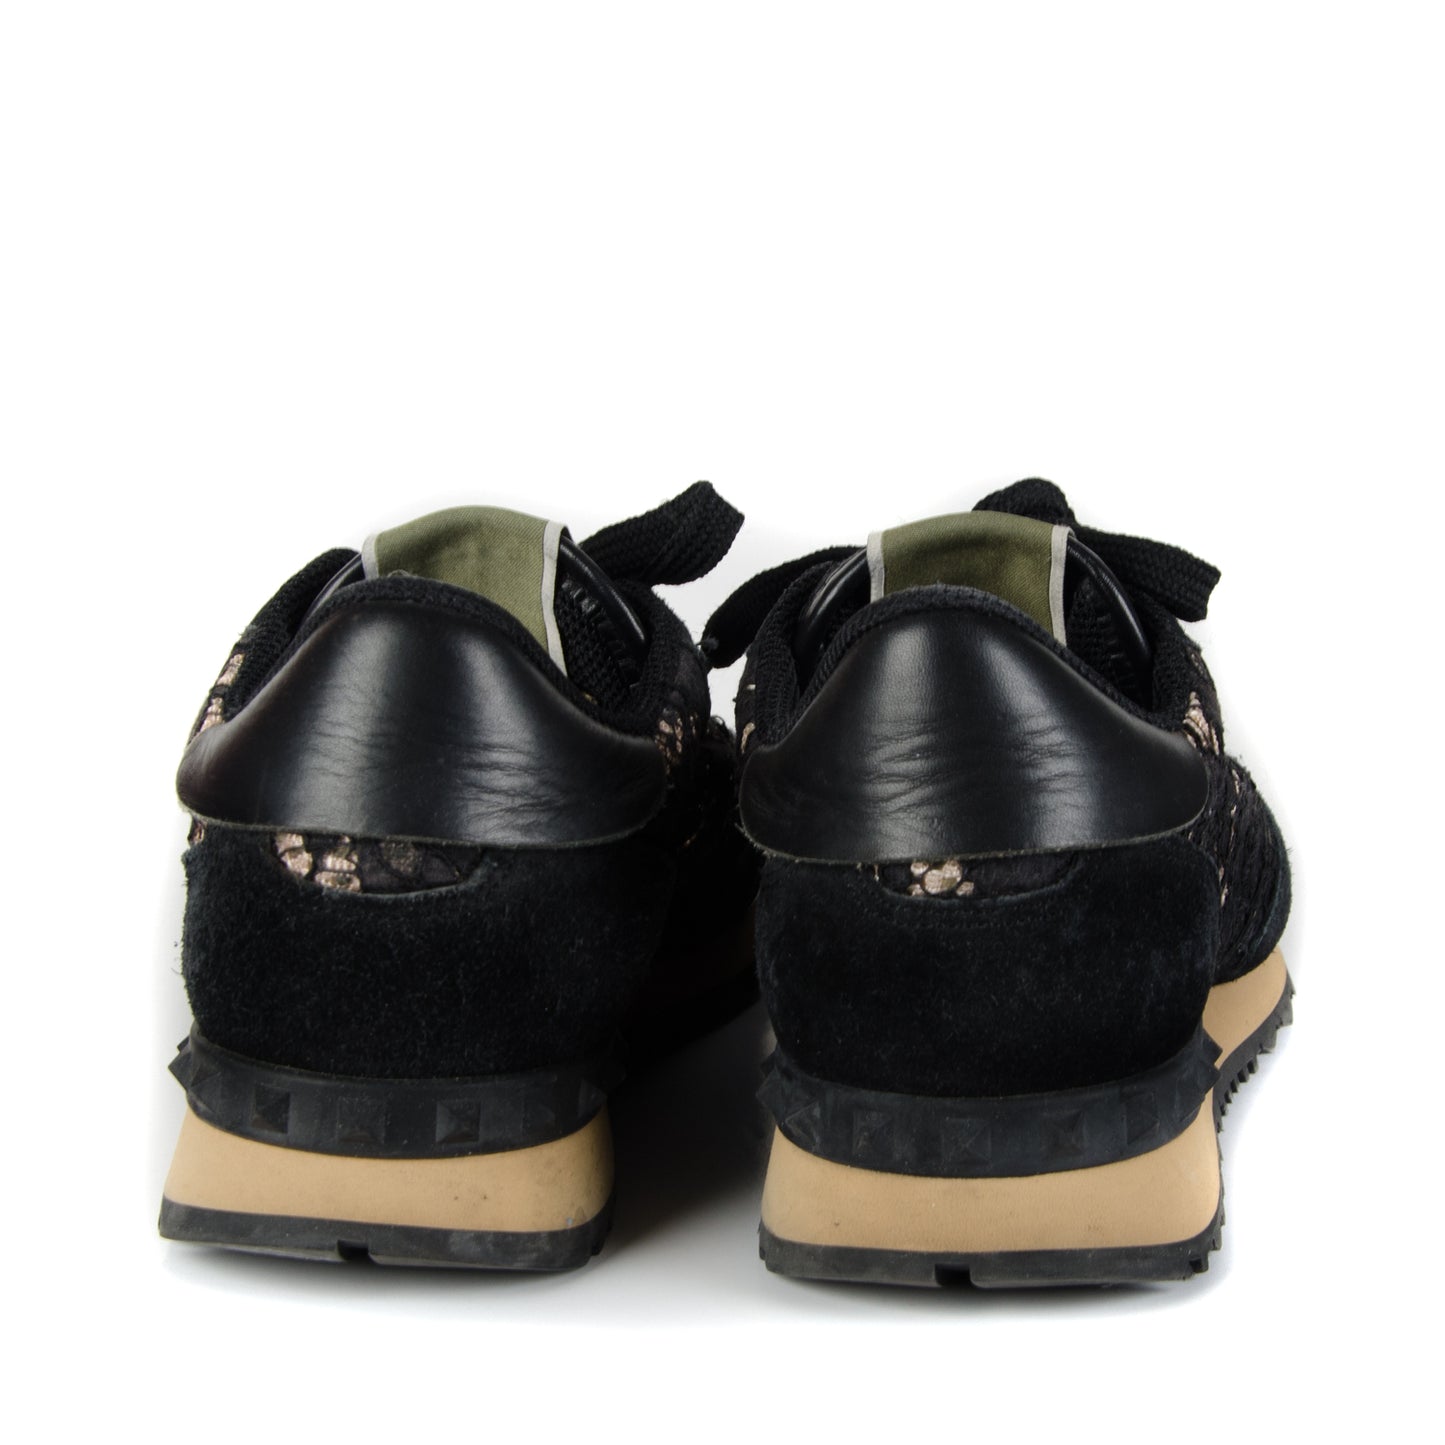 Black Lace Rock Runner Sneakers